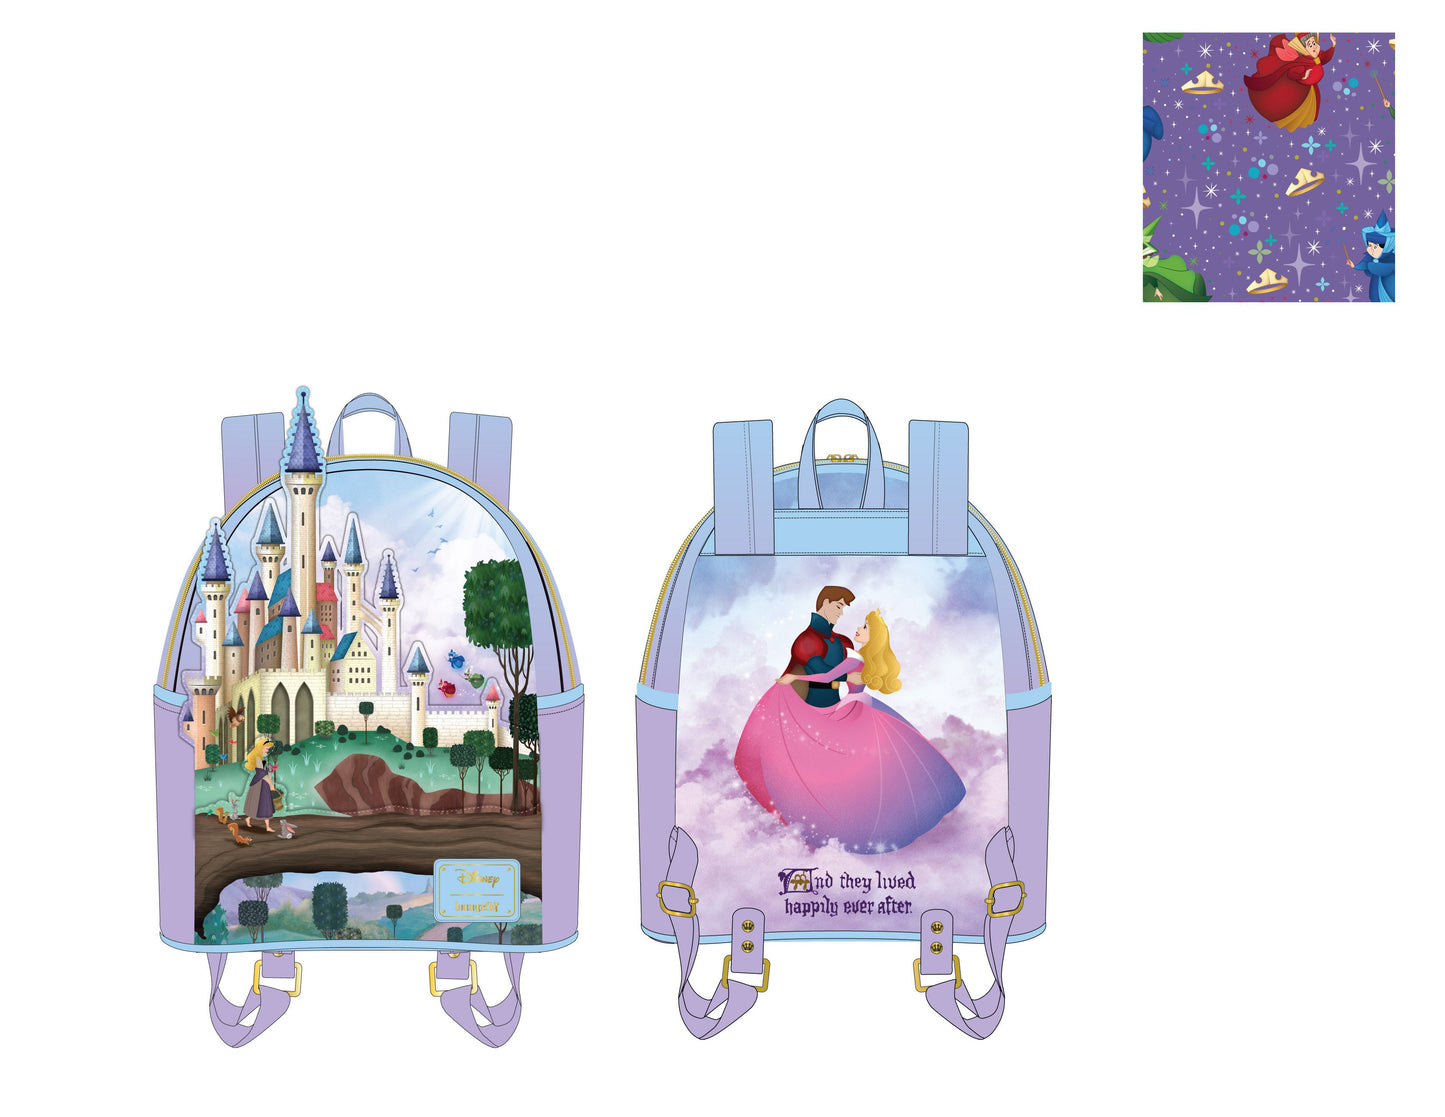 Loungefly Disney Princess Castle Series Sleeping Beauty Mini